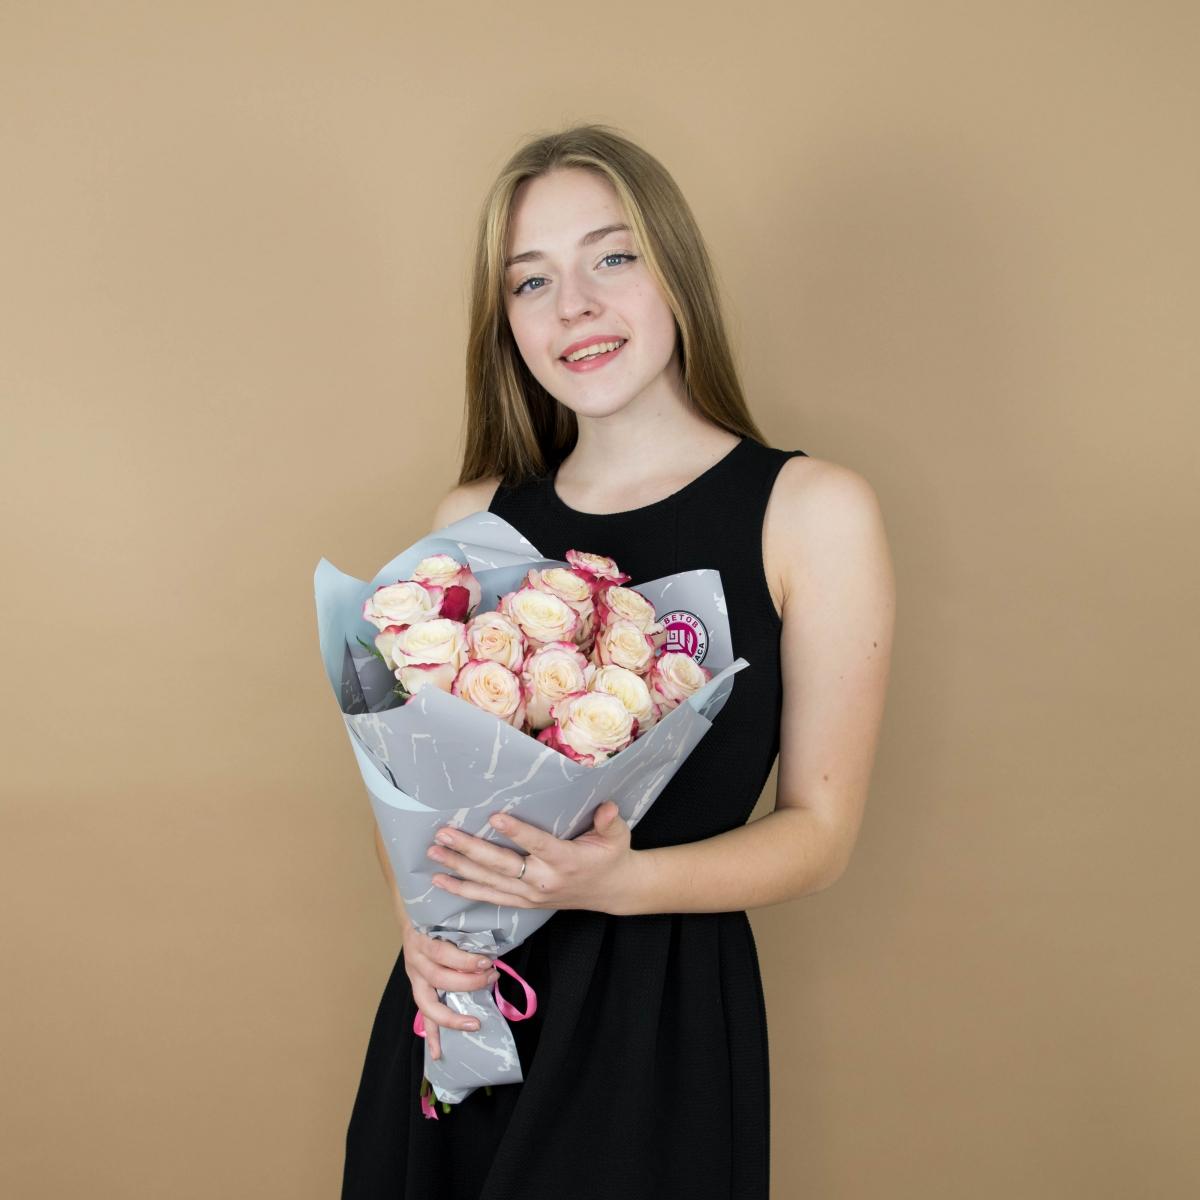 Розы красно-белые 15 шт 40 см (Эквадор) (Артикул: 86064)